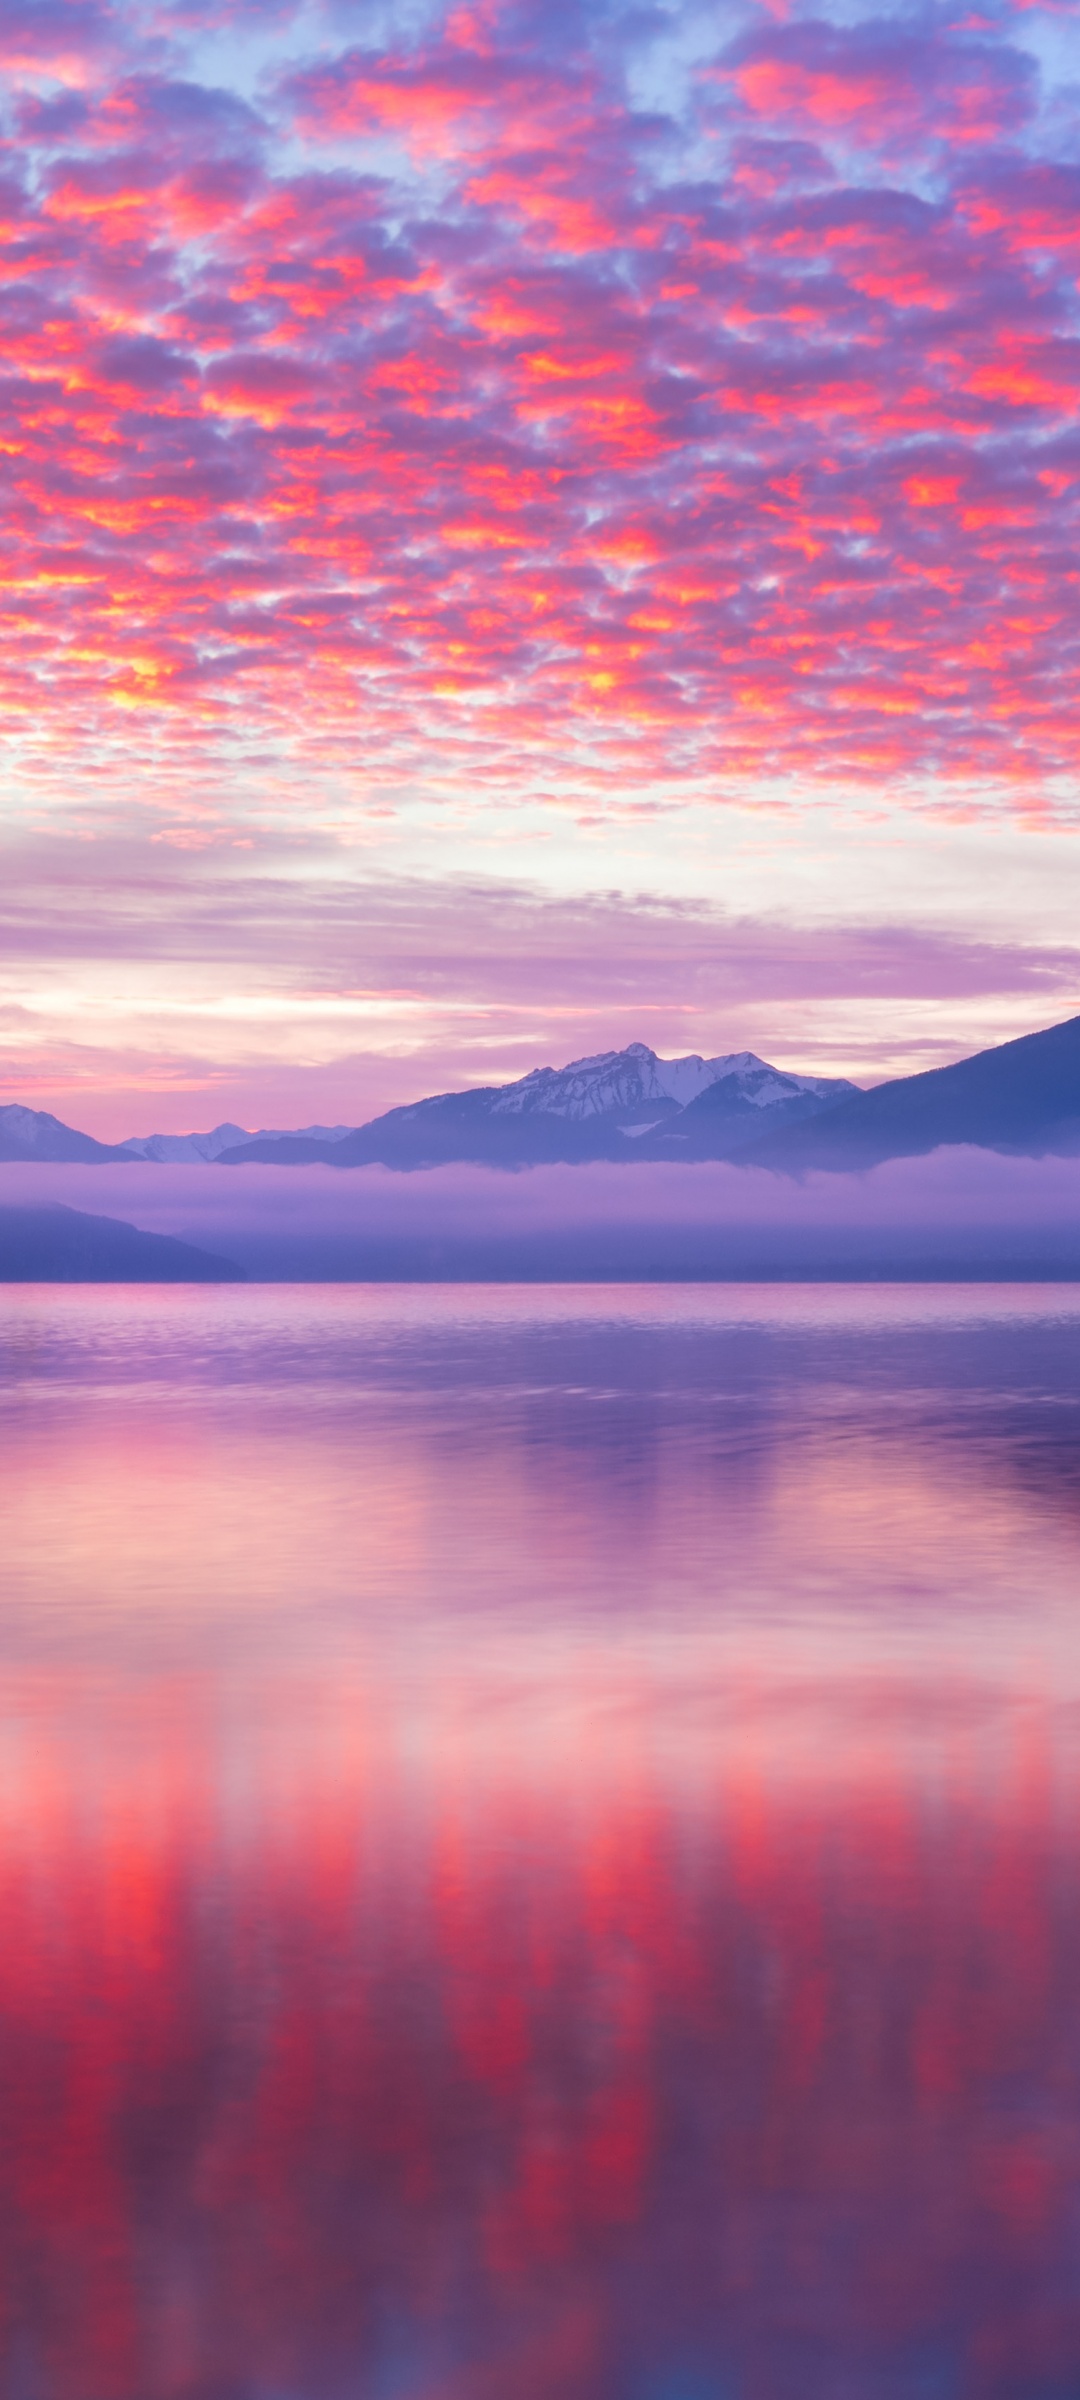 Pink Clouds 4K Wallpaper, Reflection, Lake, Body of Water, Mountains